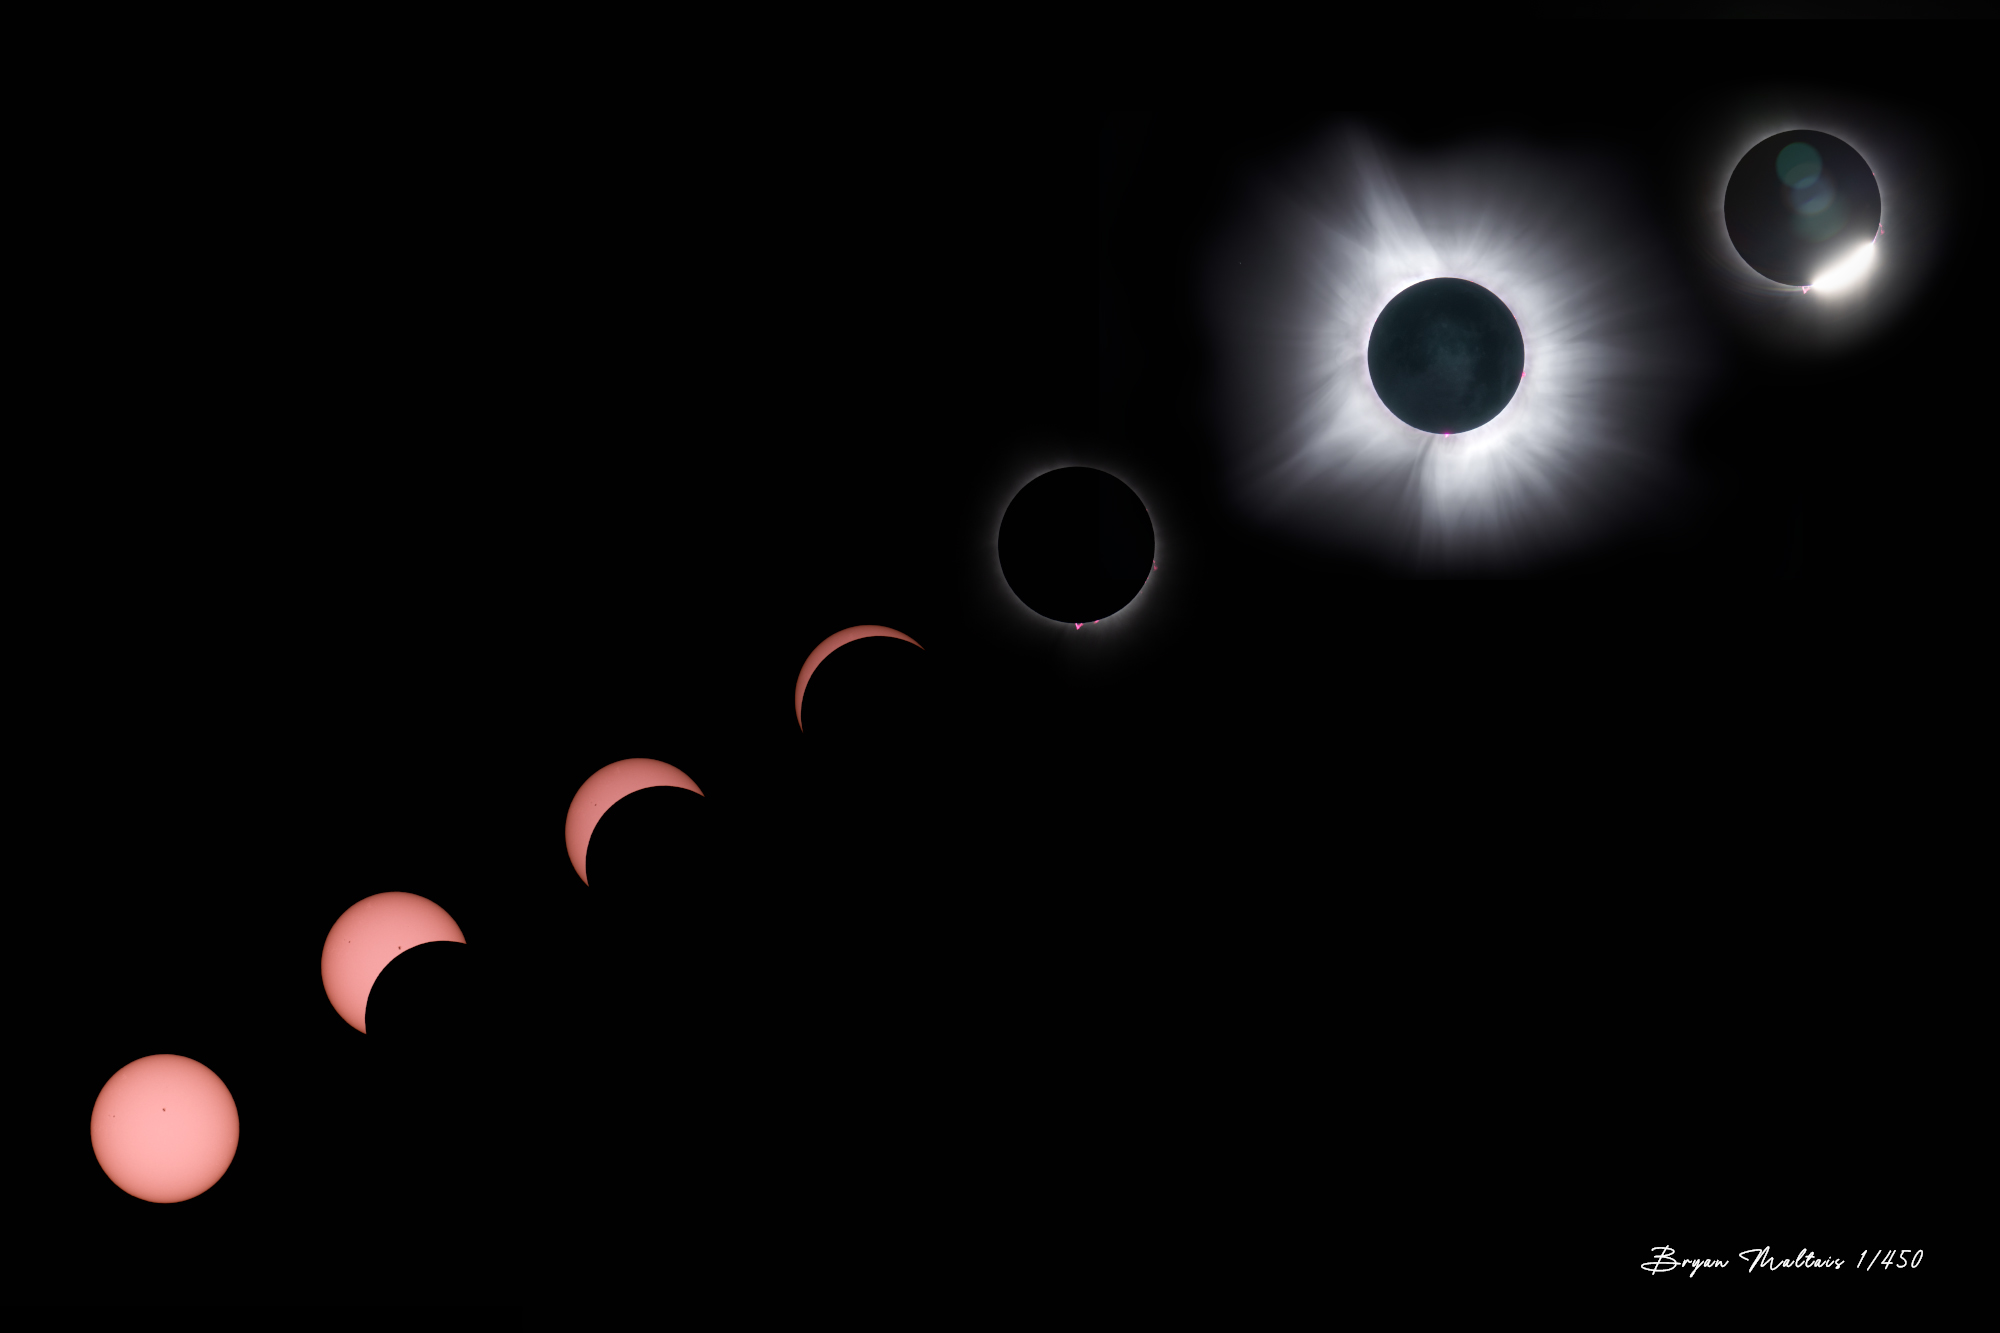 2024 total solar eclipse commemorative photo print phases